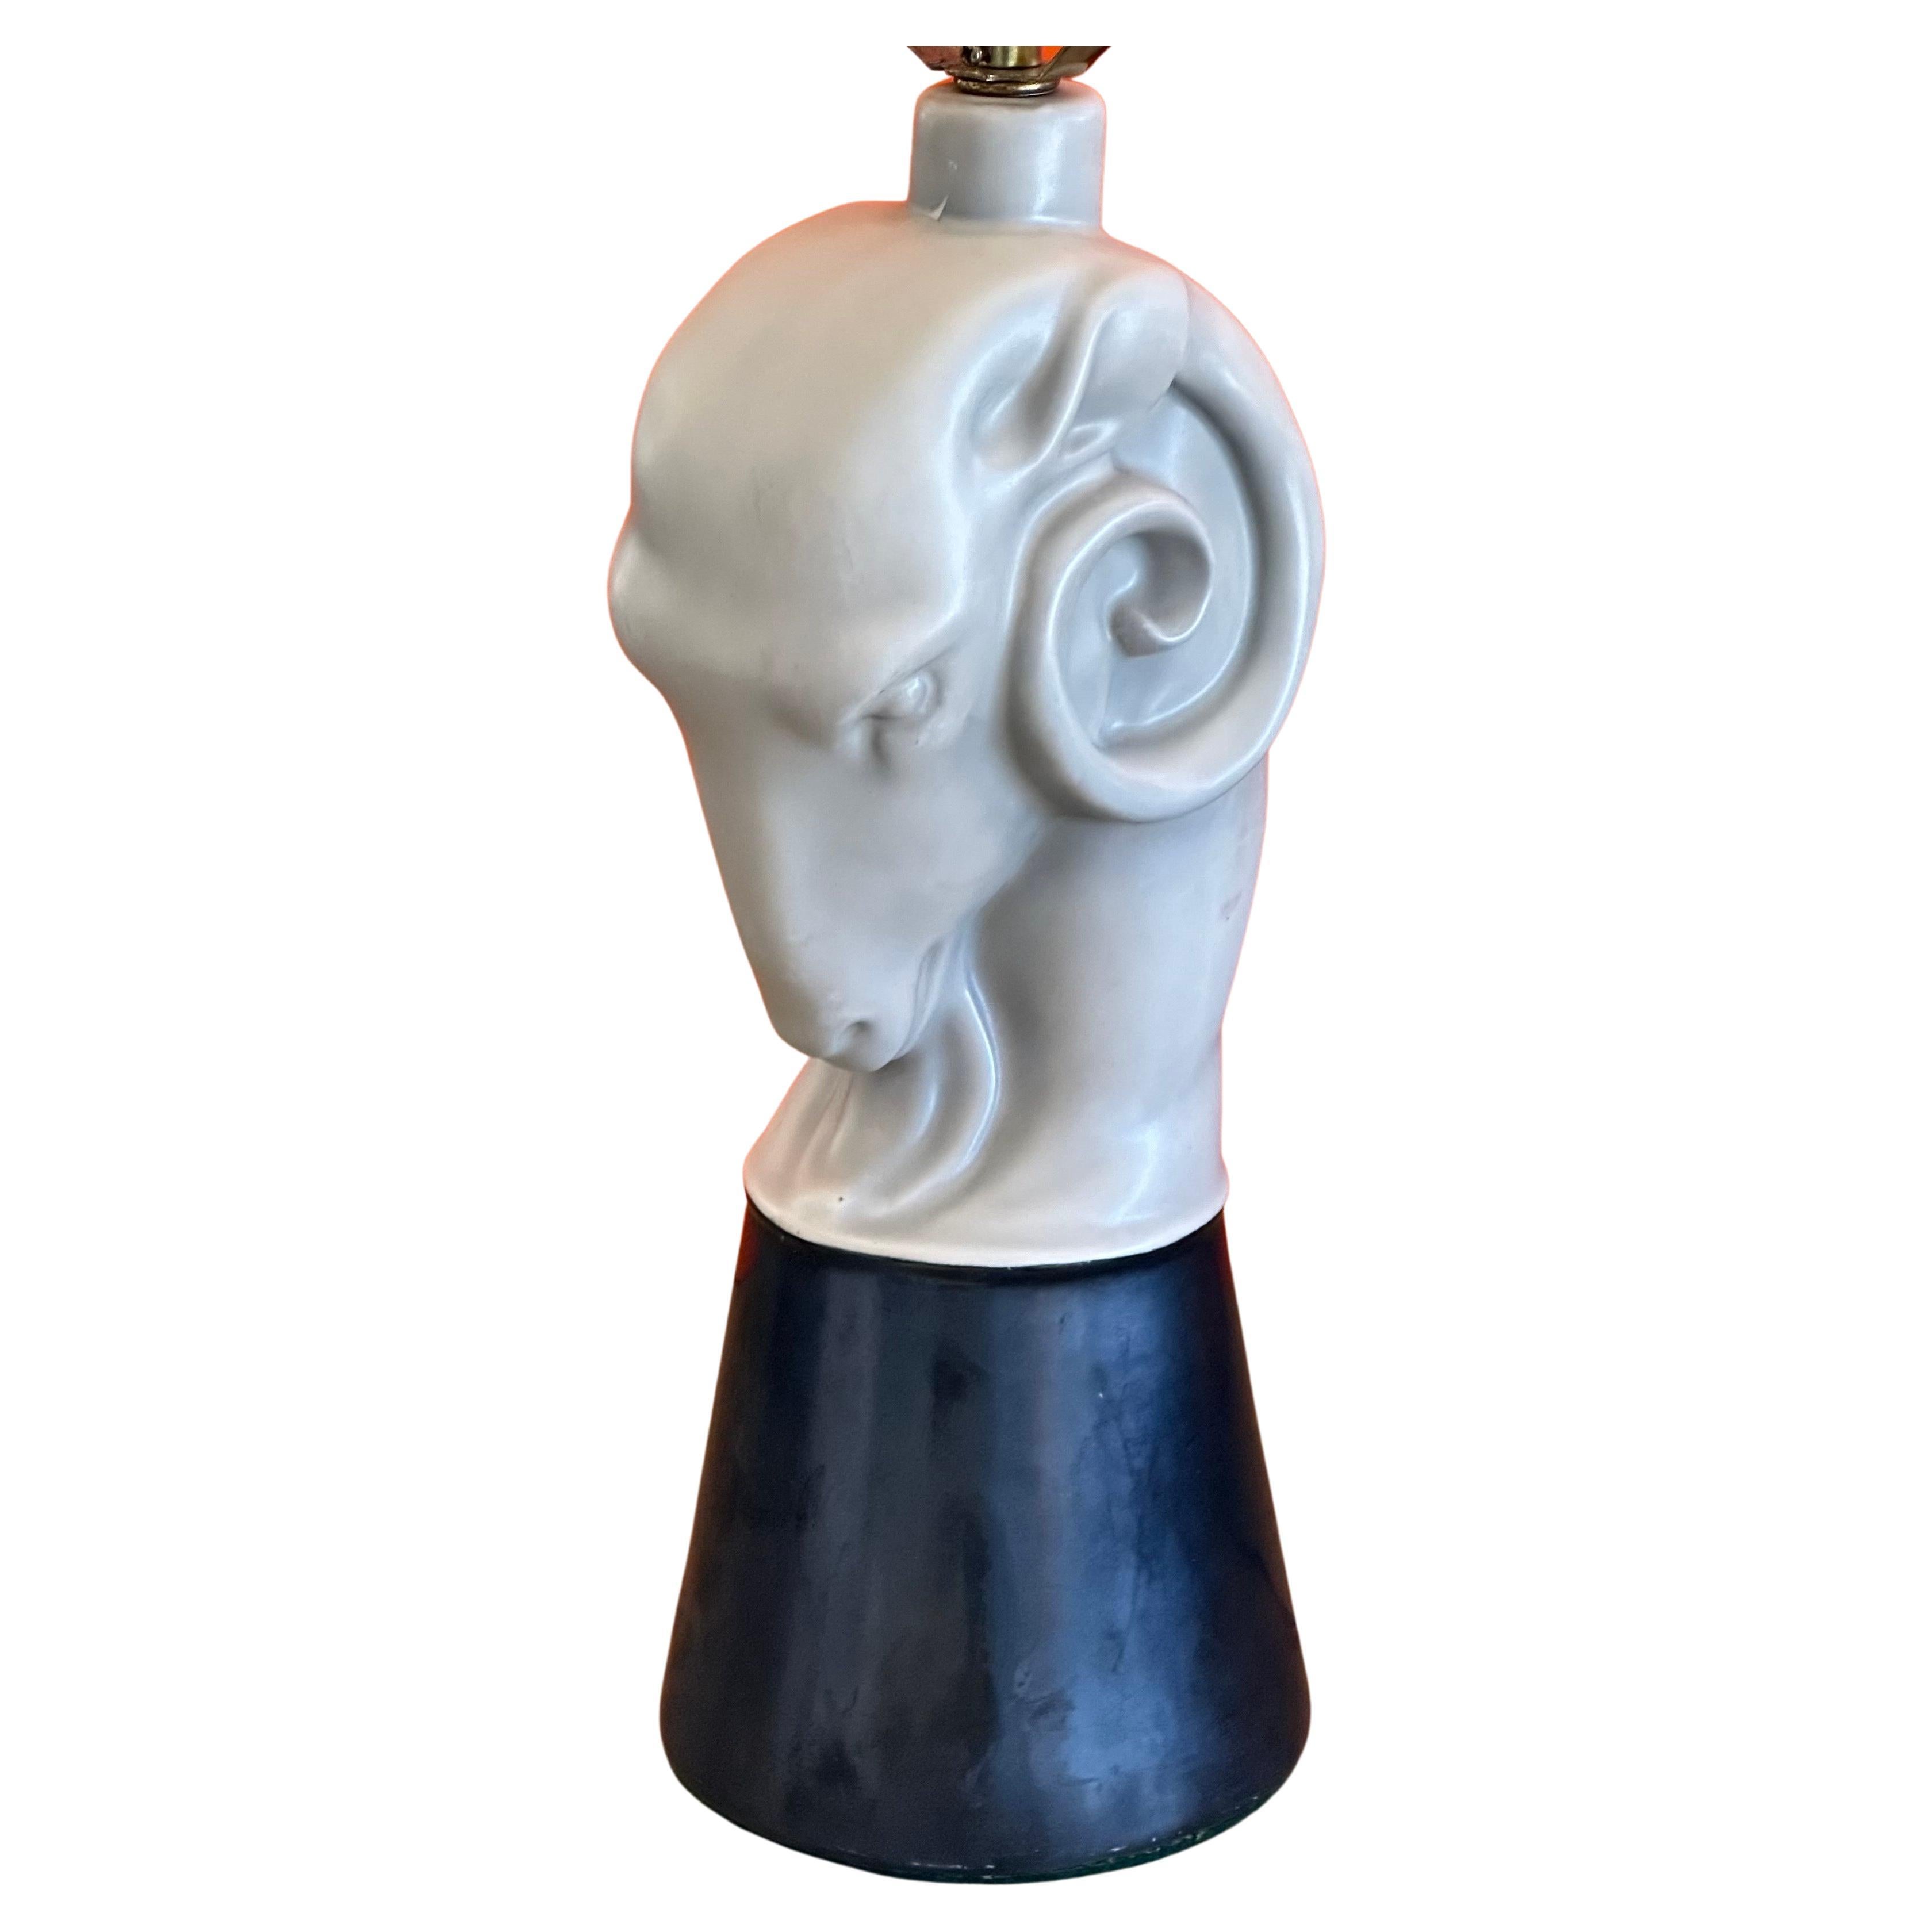 20th Century Hollywood Regency Ceramic Ram's Head Figurative Table Lamp For Sale